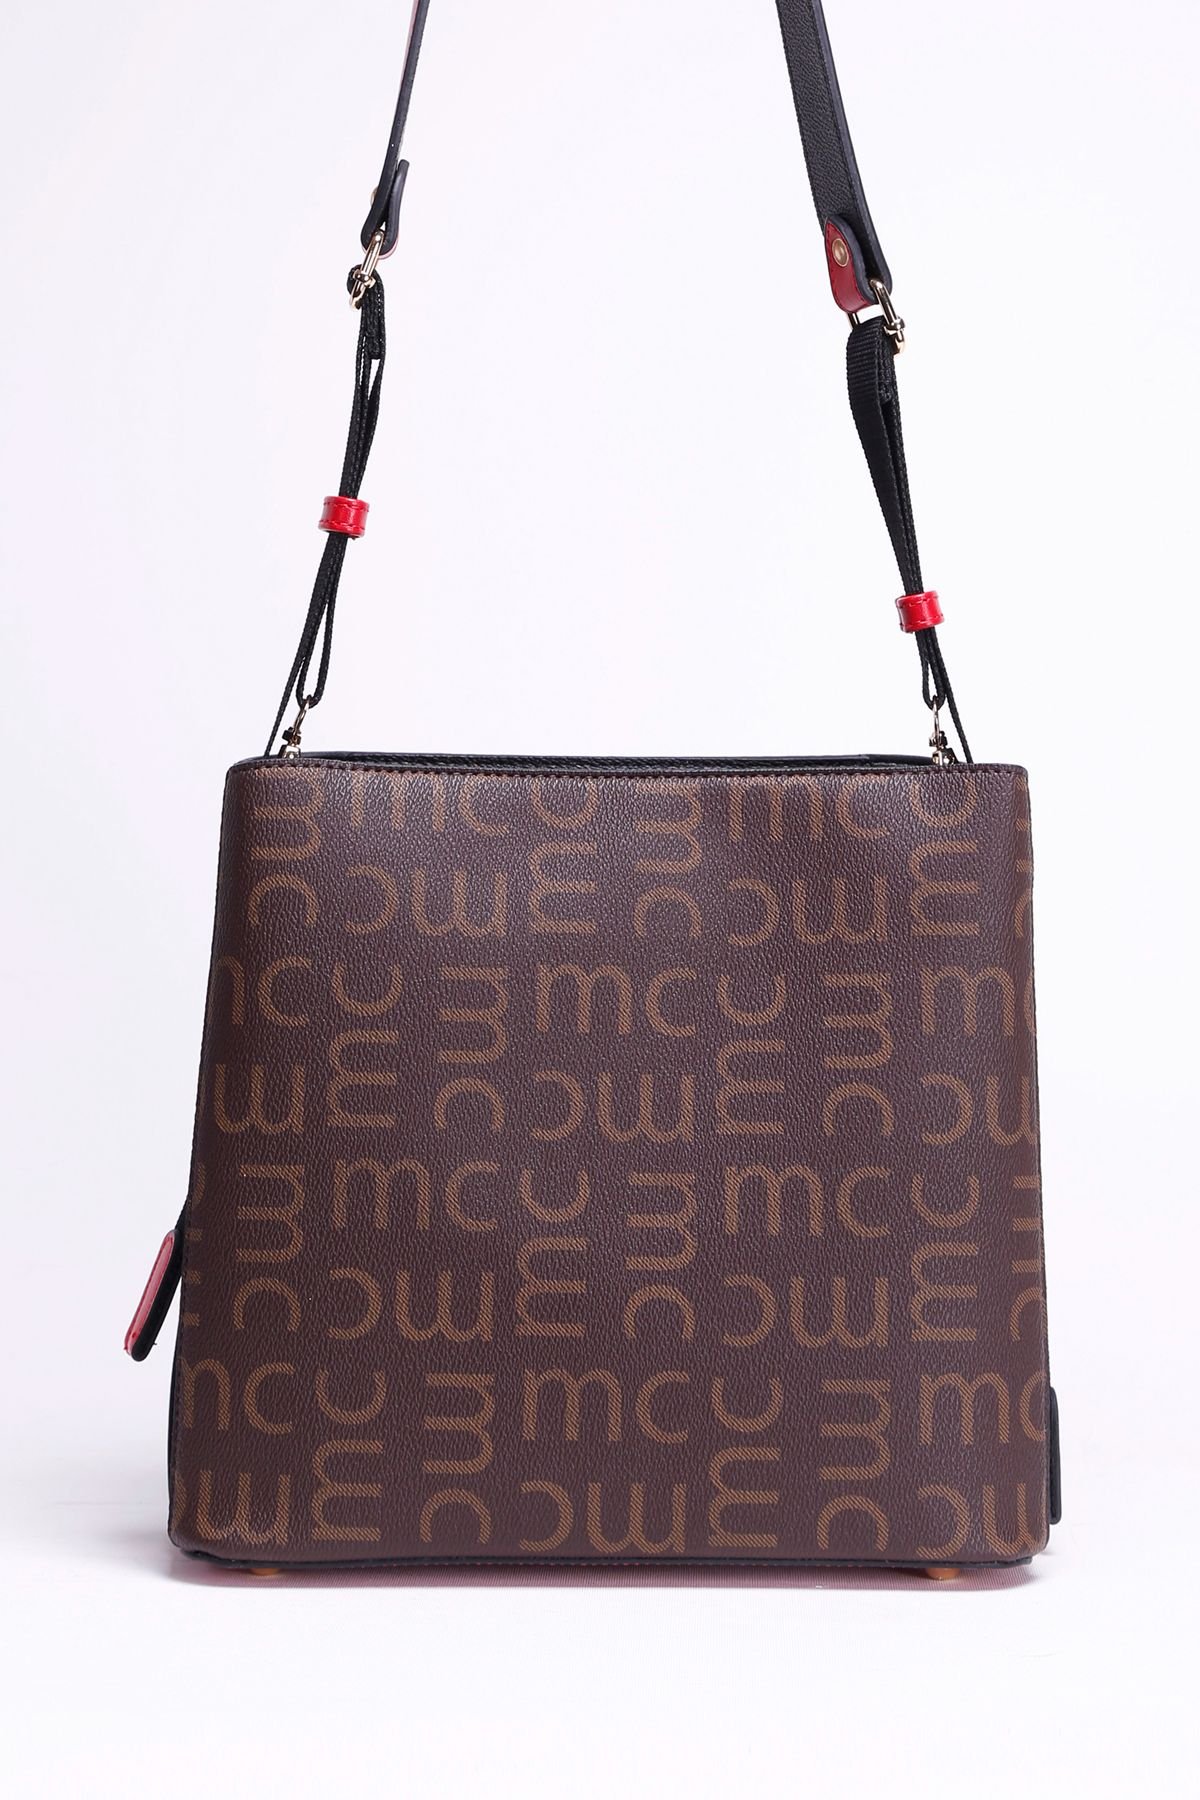 Marie Claire Brown Women Messenger Bag Miranda MC212103109